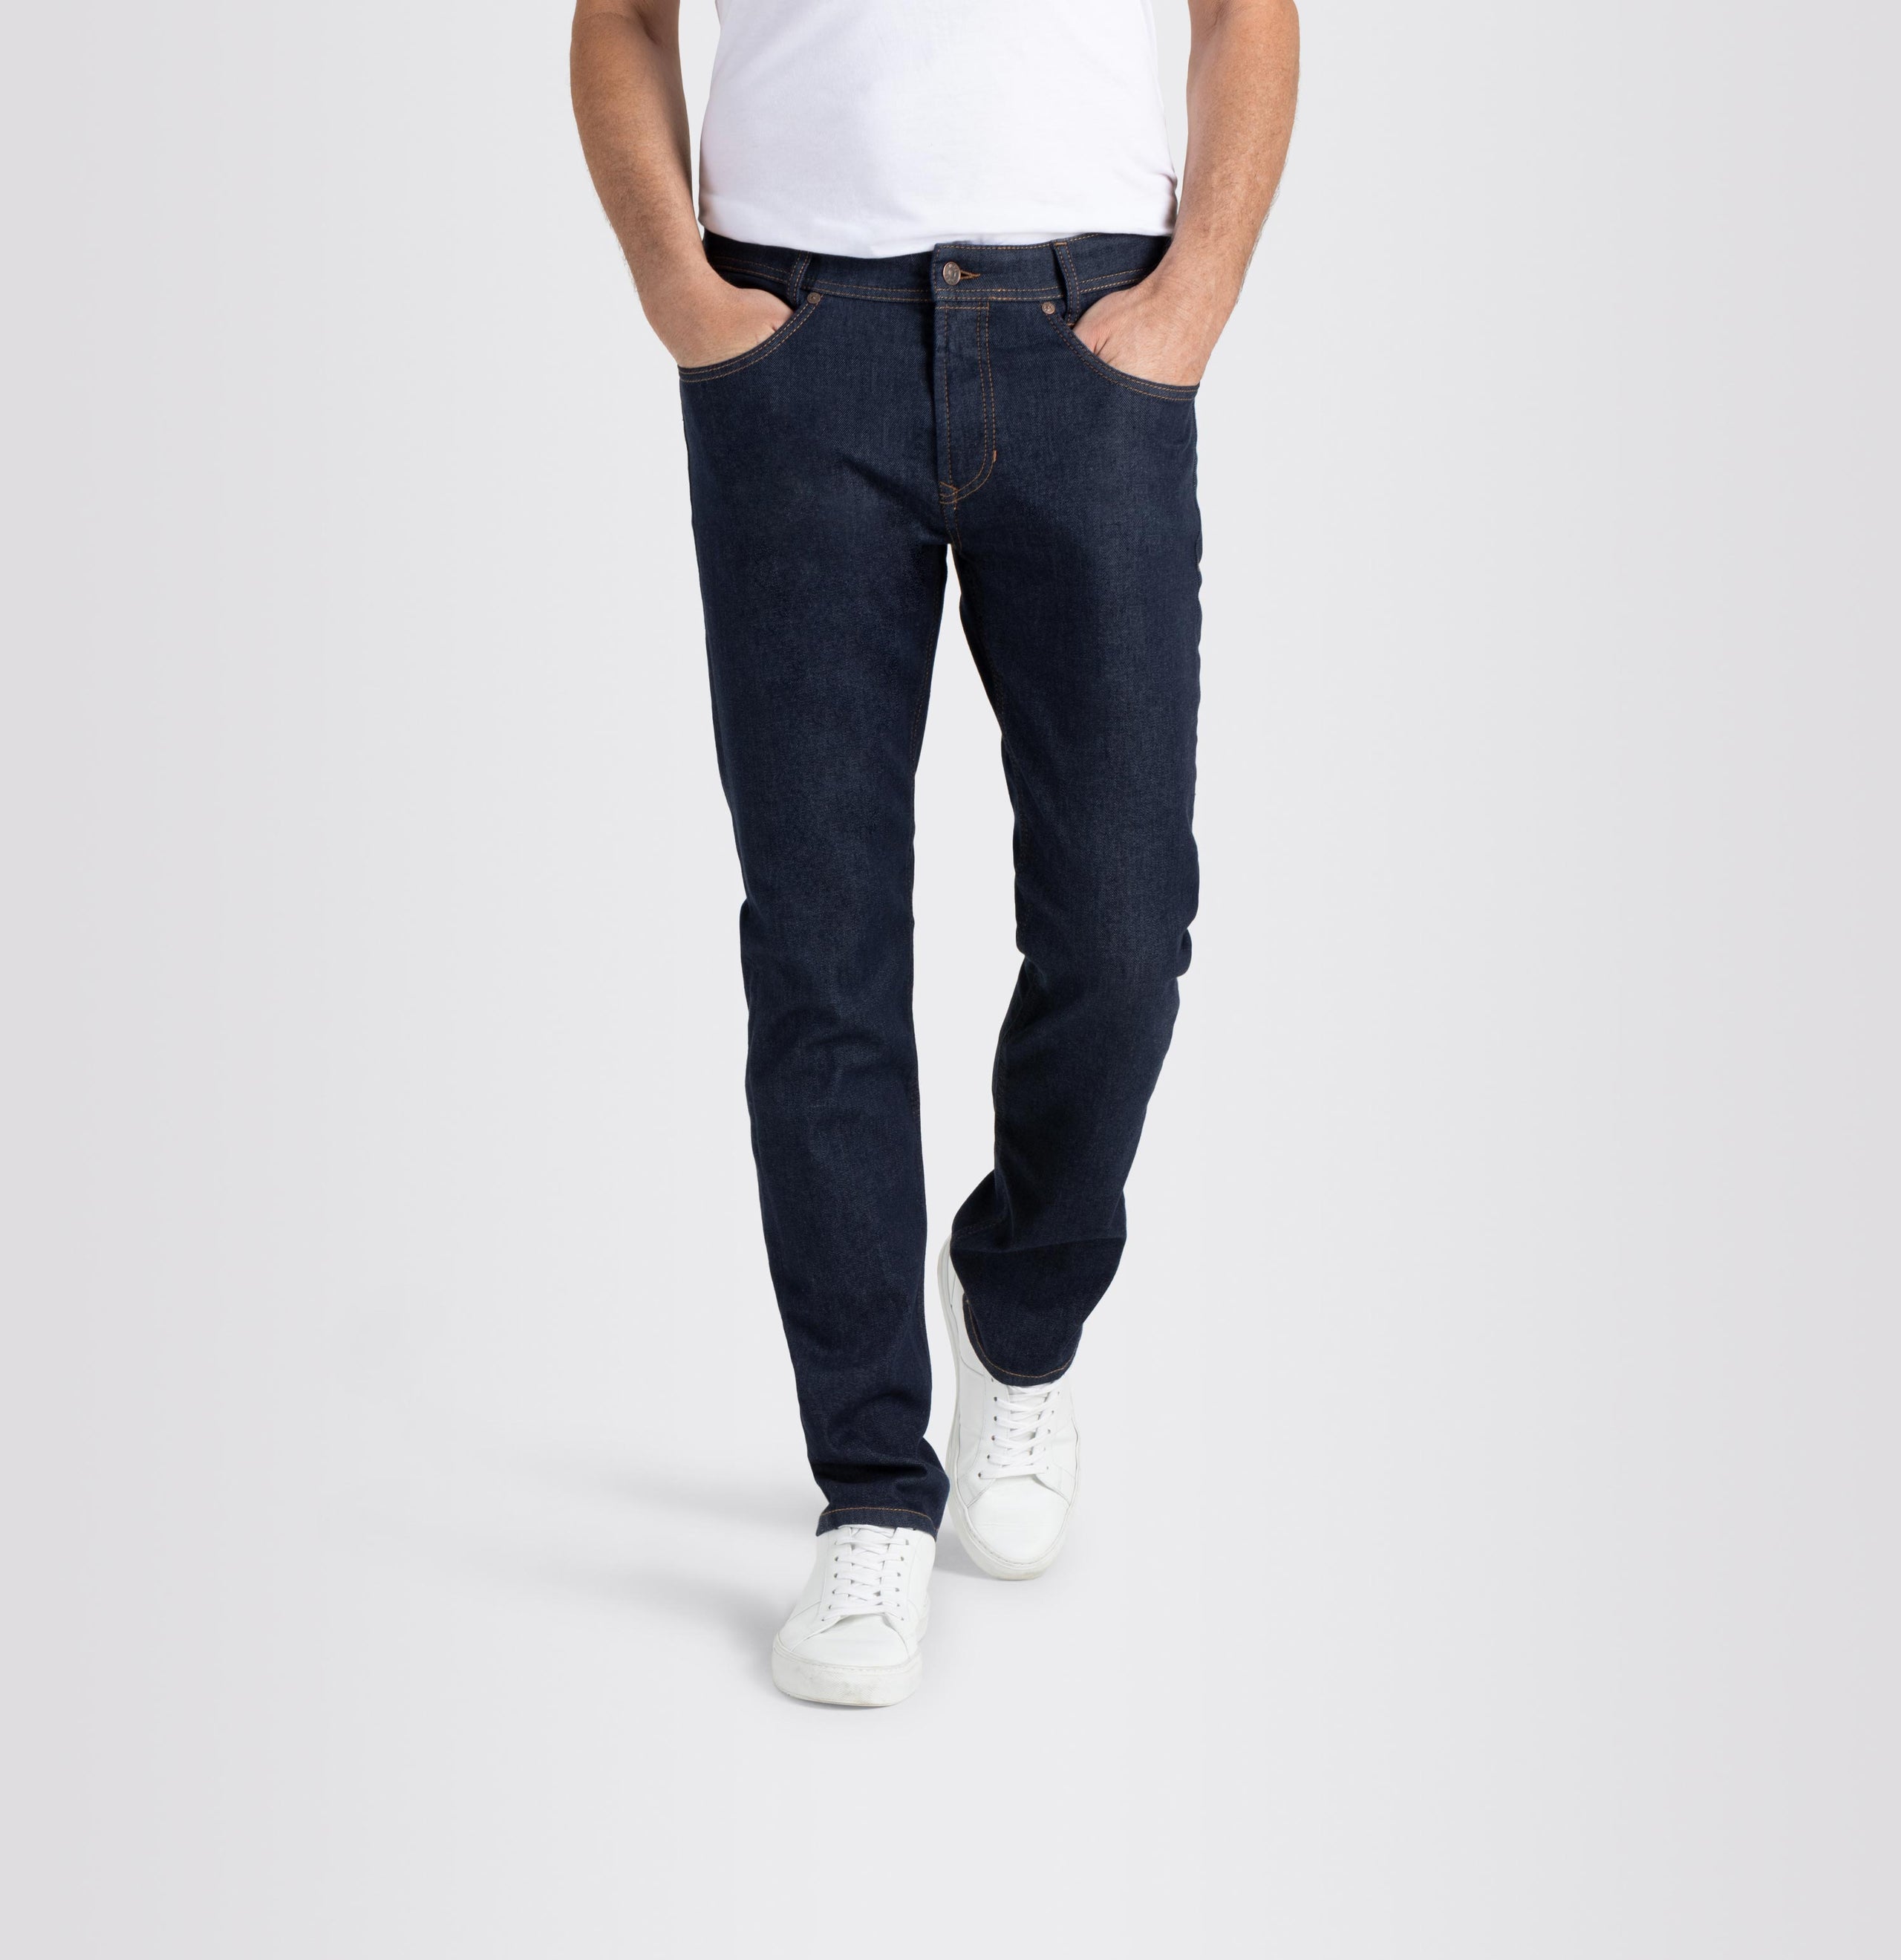 Jeans - Ever Pants Ultimate Driver - MacFlexx Mac - Blue